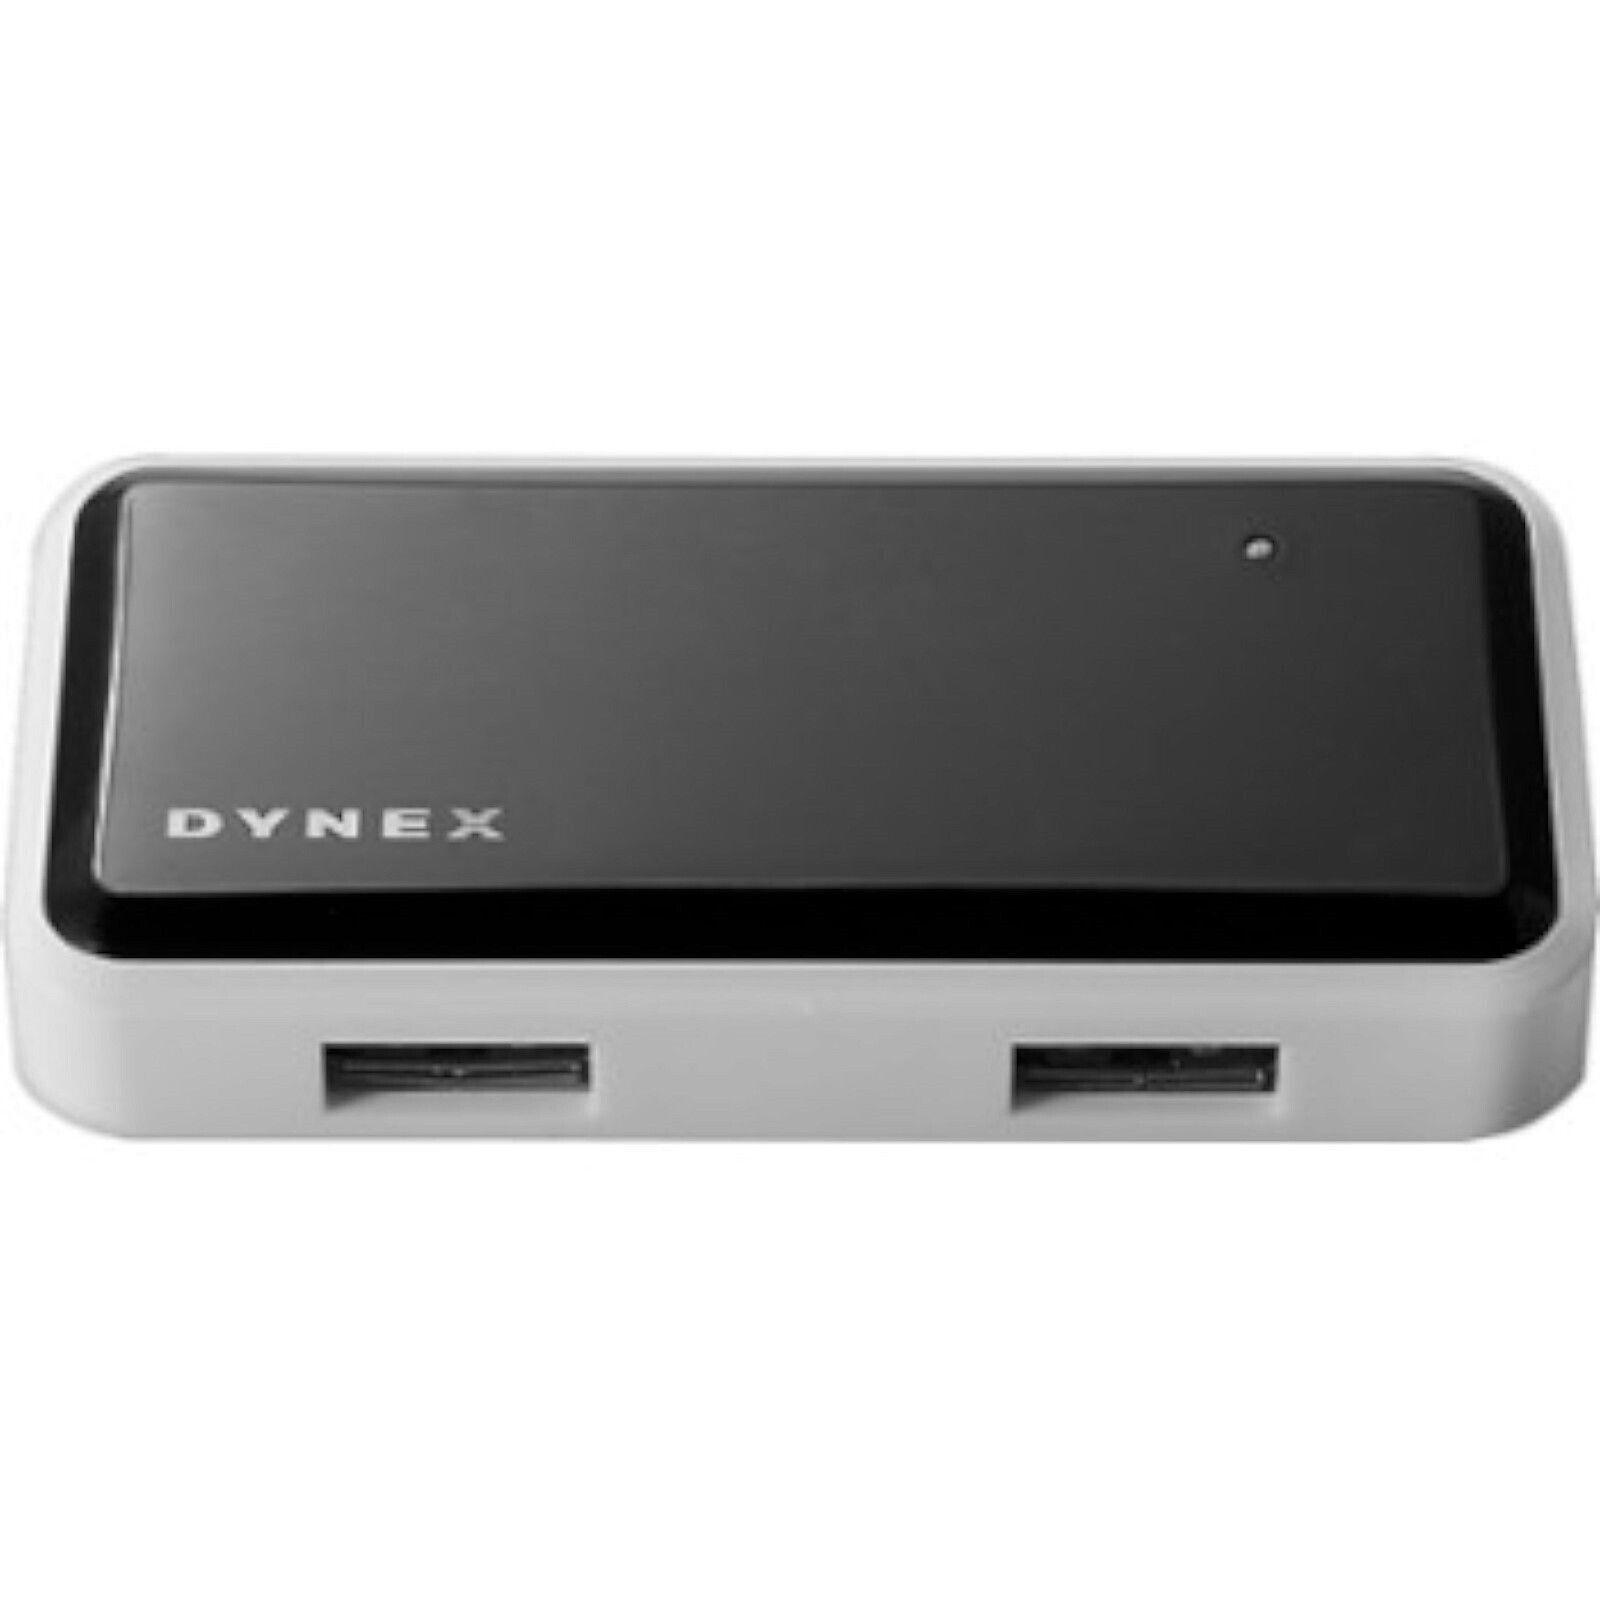 NEW Dynex DX-PCH5421 4-Port USB 2.0 Powered Device Hub 480Mbps PC/Mac Computer